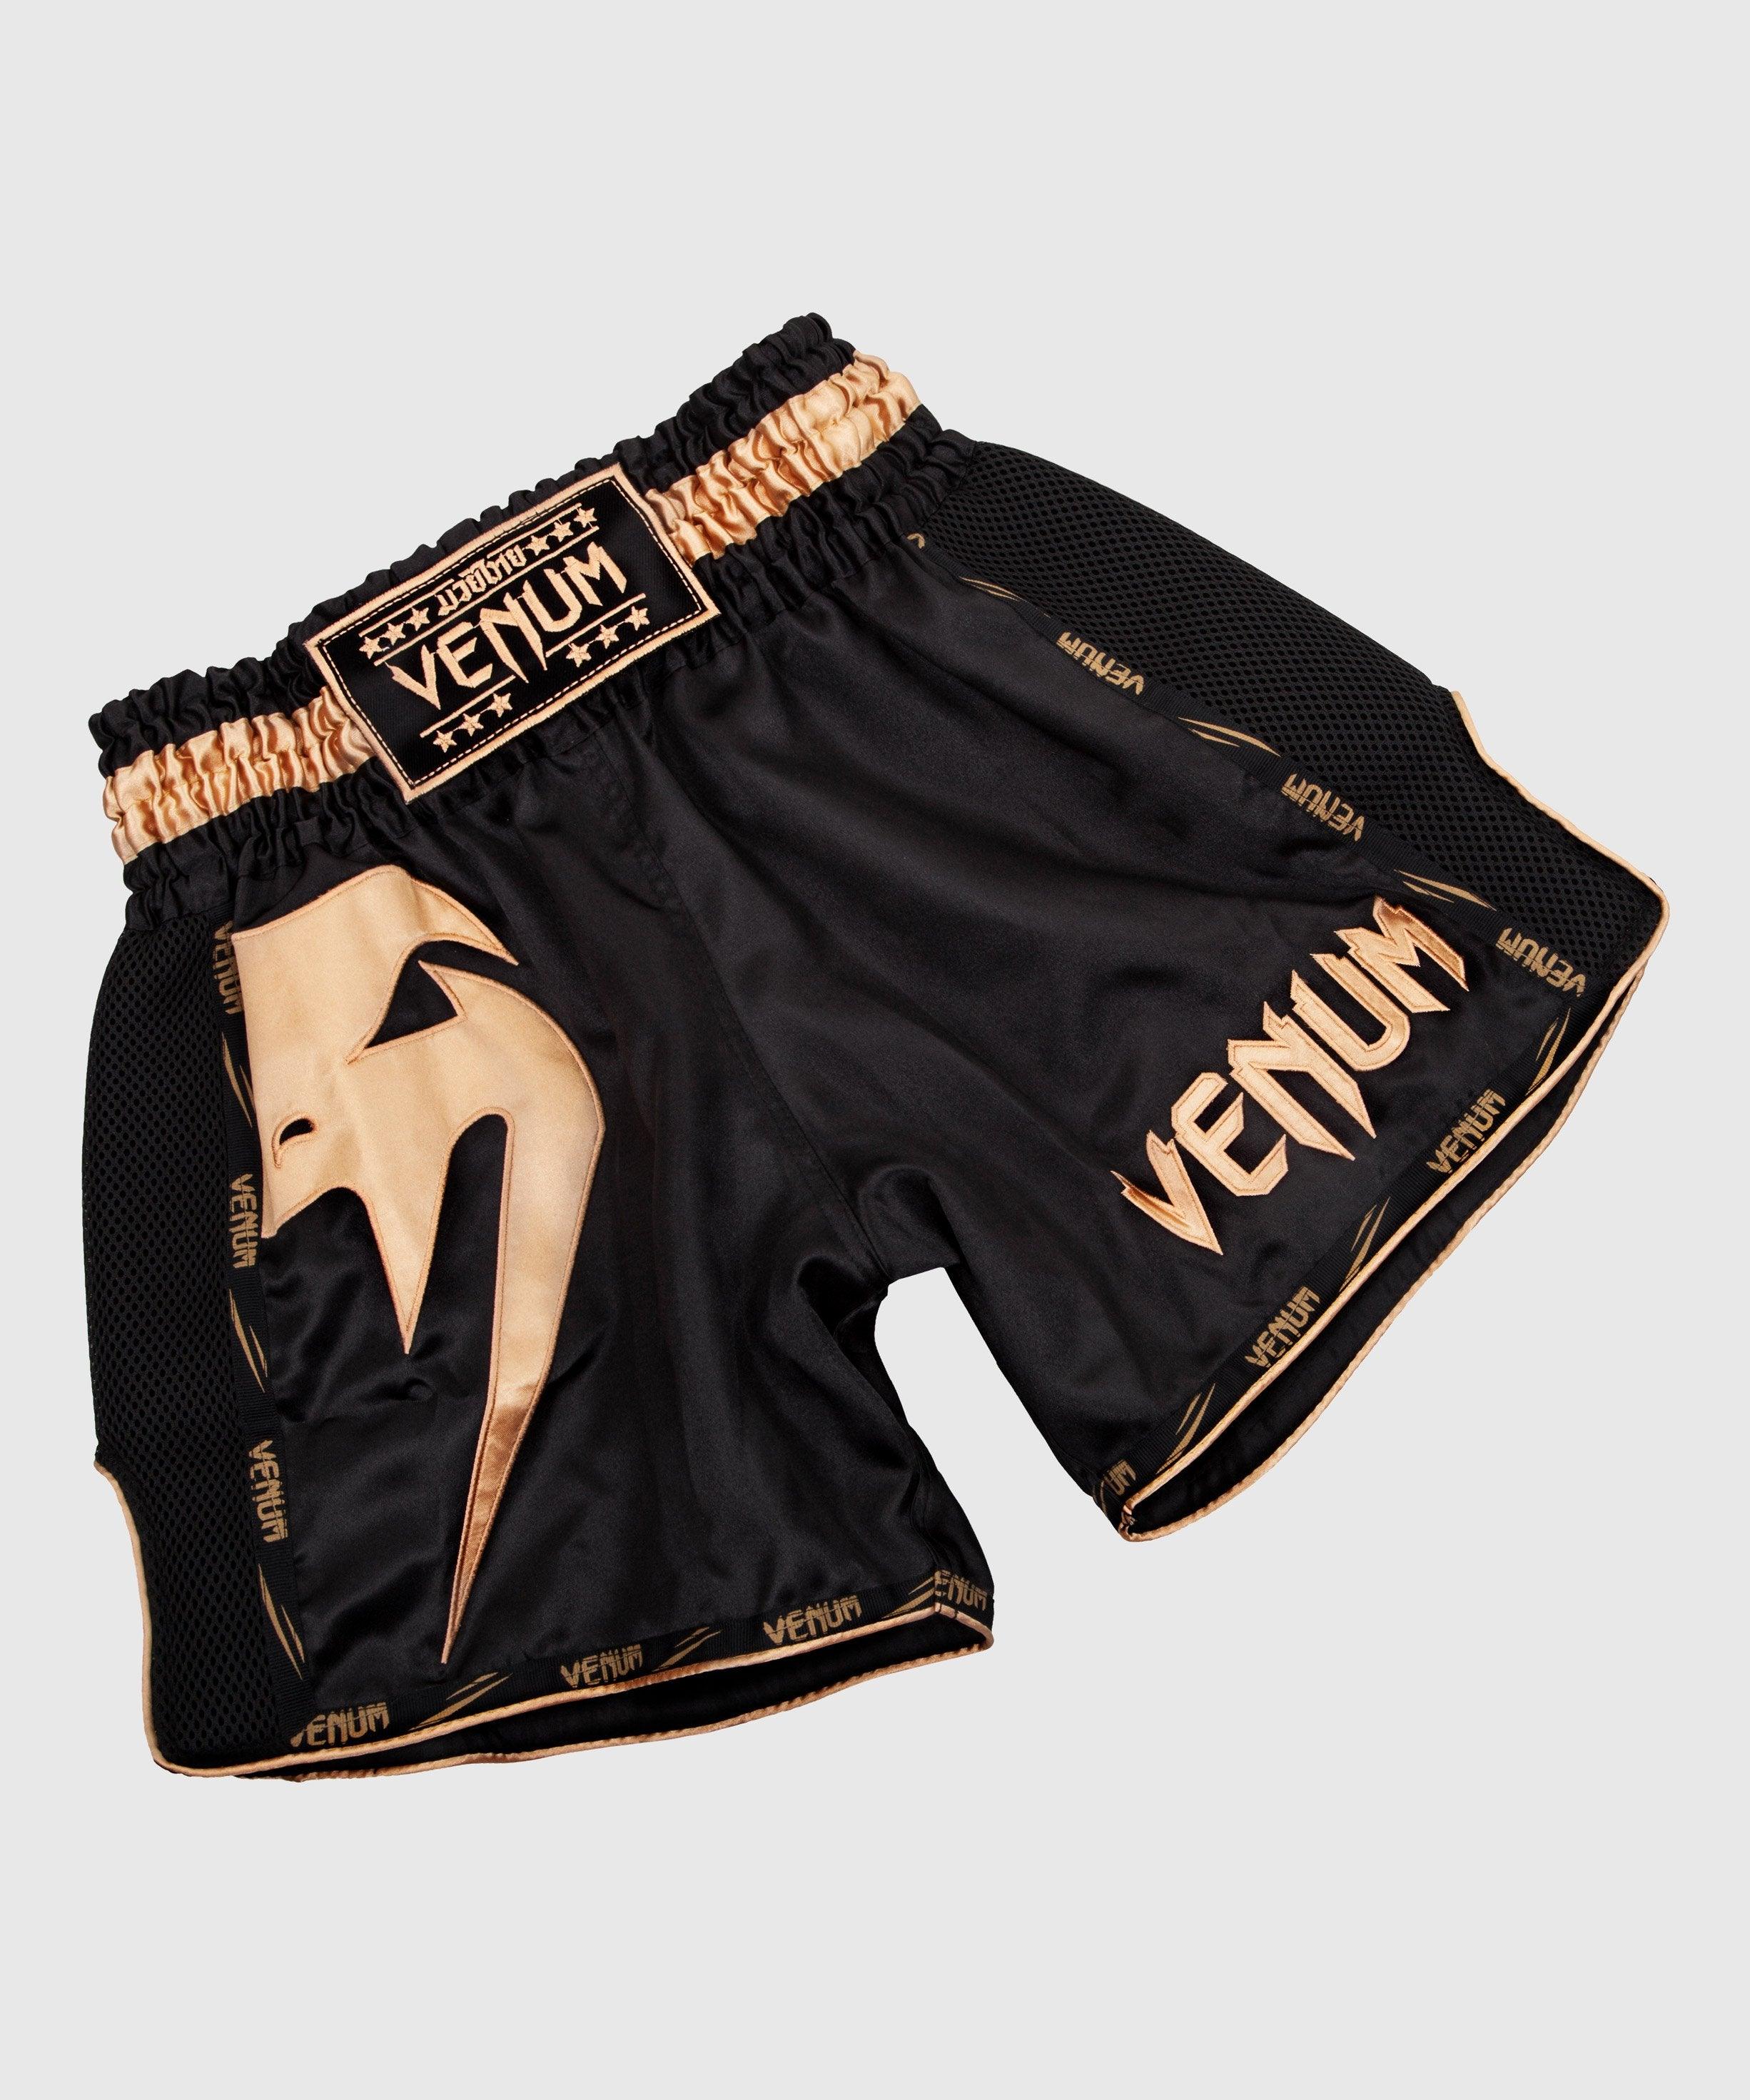 Pantalón de Muay Thai Venum Giant - Negro/Oro